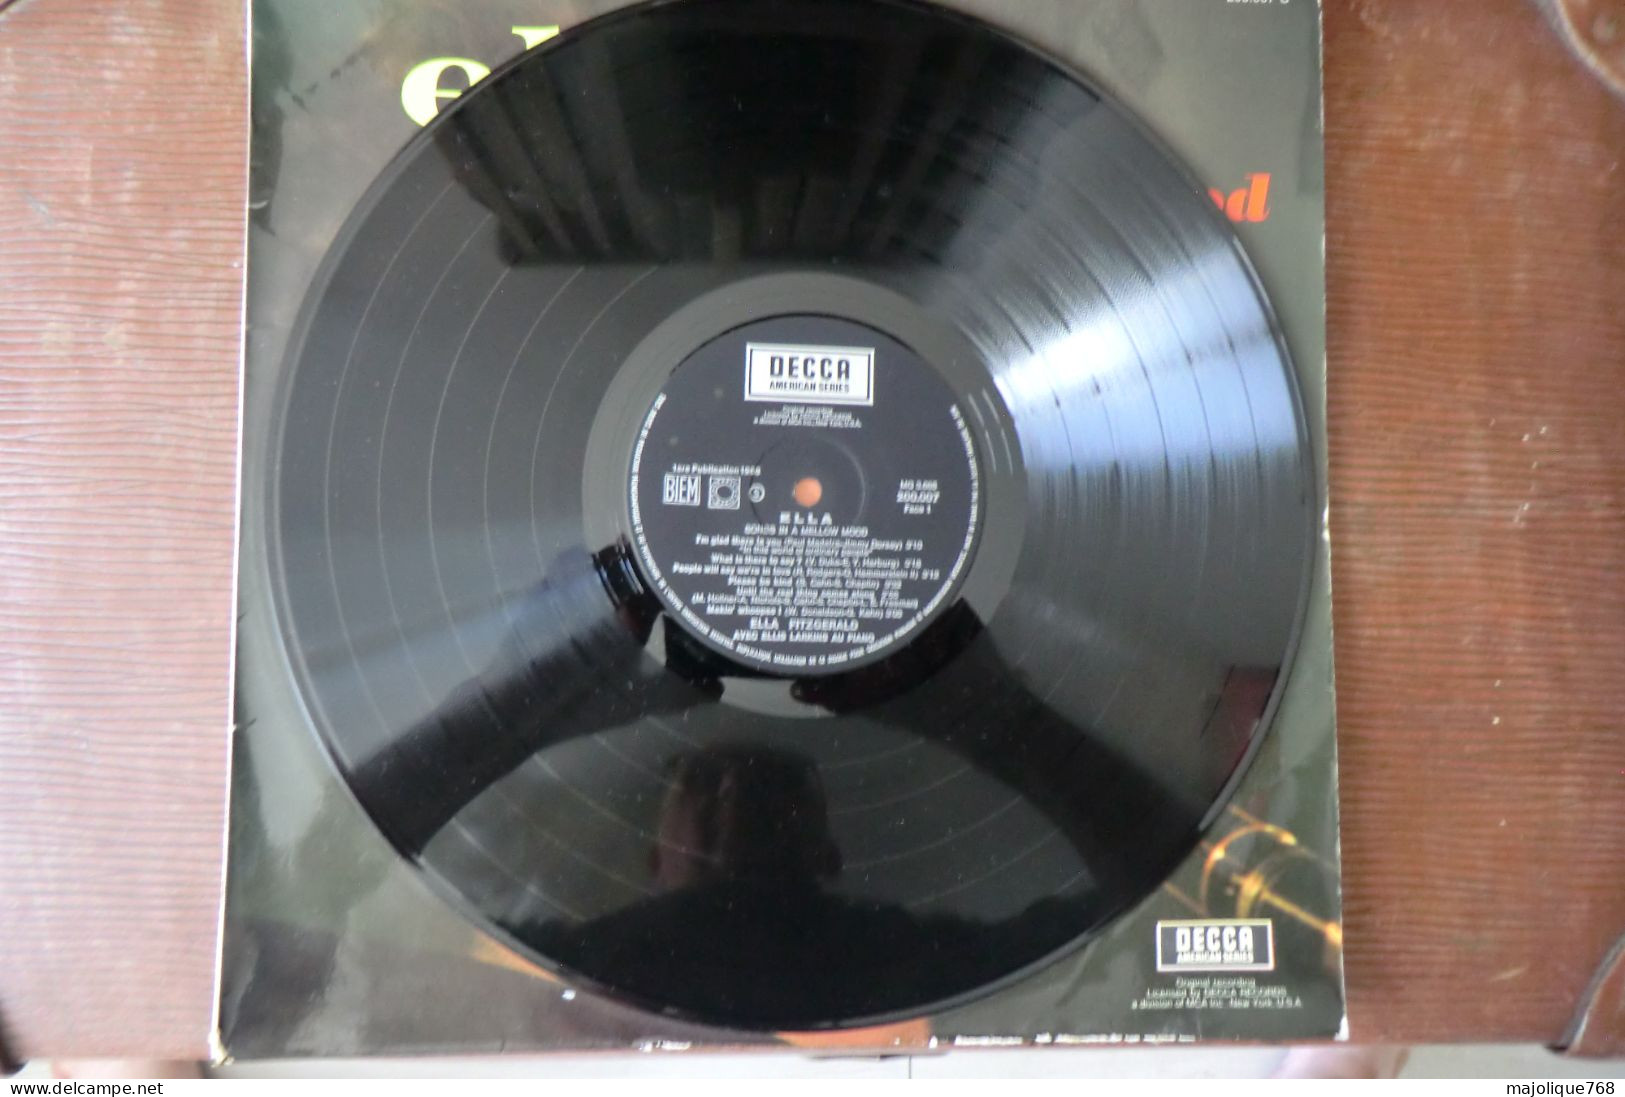 : Disque 33T - Ella Fitzgerald With Ellis Larkins  - Ella Songs In A Mellowmood - DECCA - 200.007 S - France 1966 - - Jazz